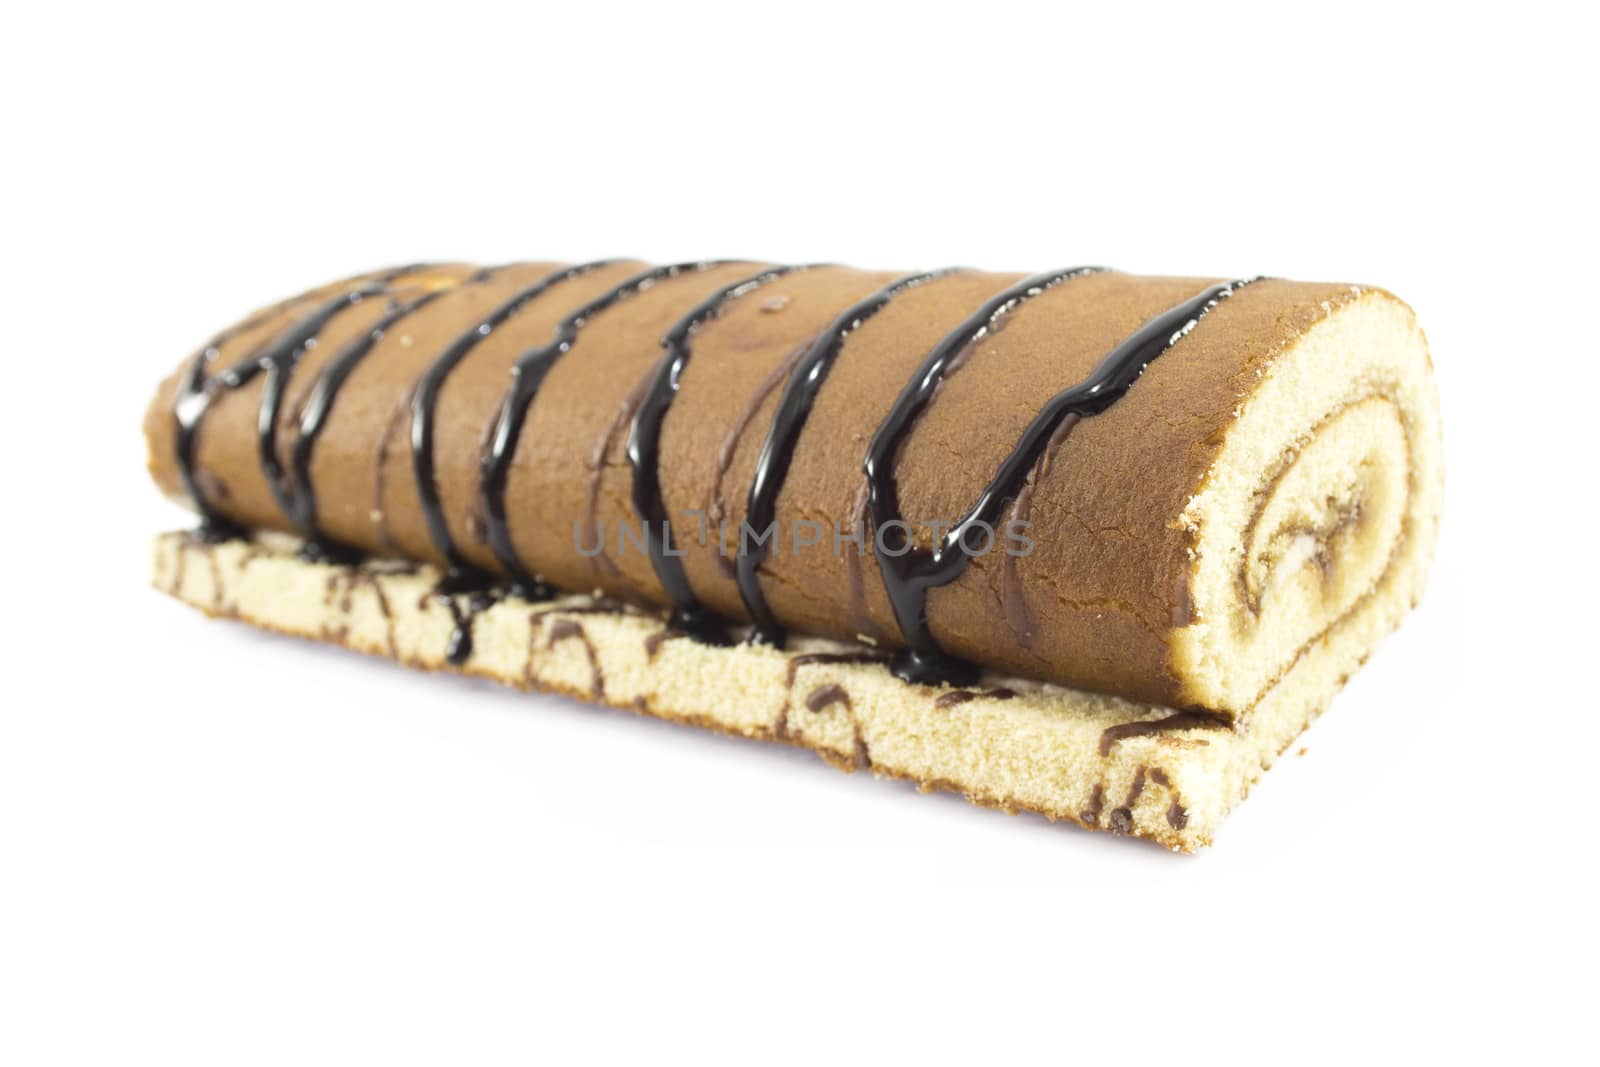 Sweet roll cake by designsstock